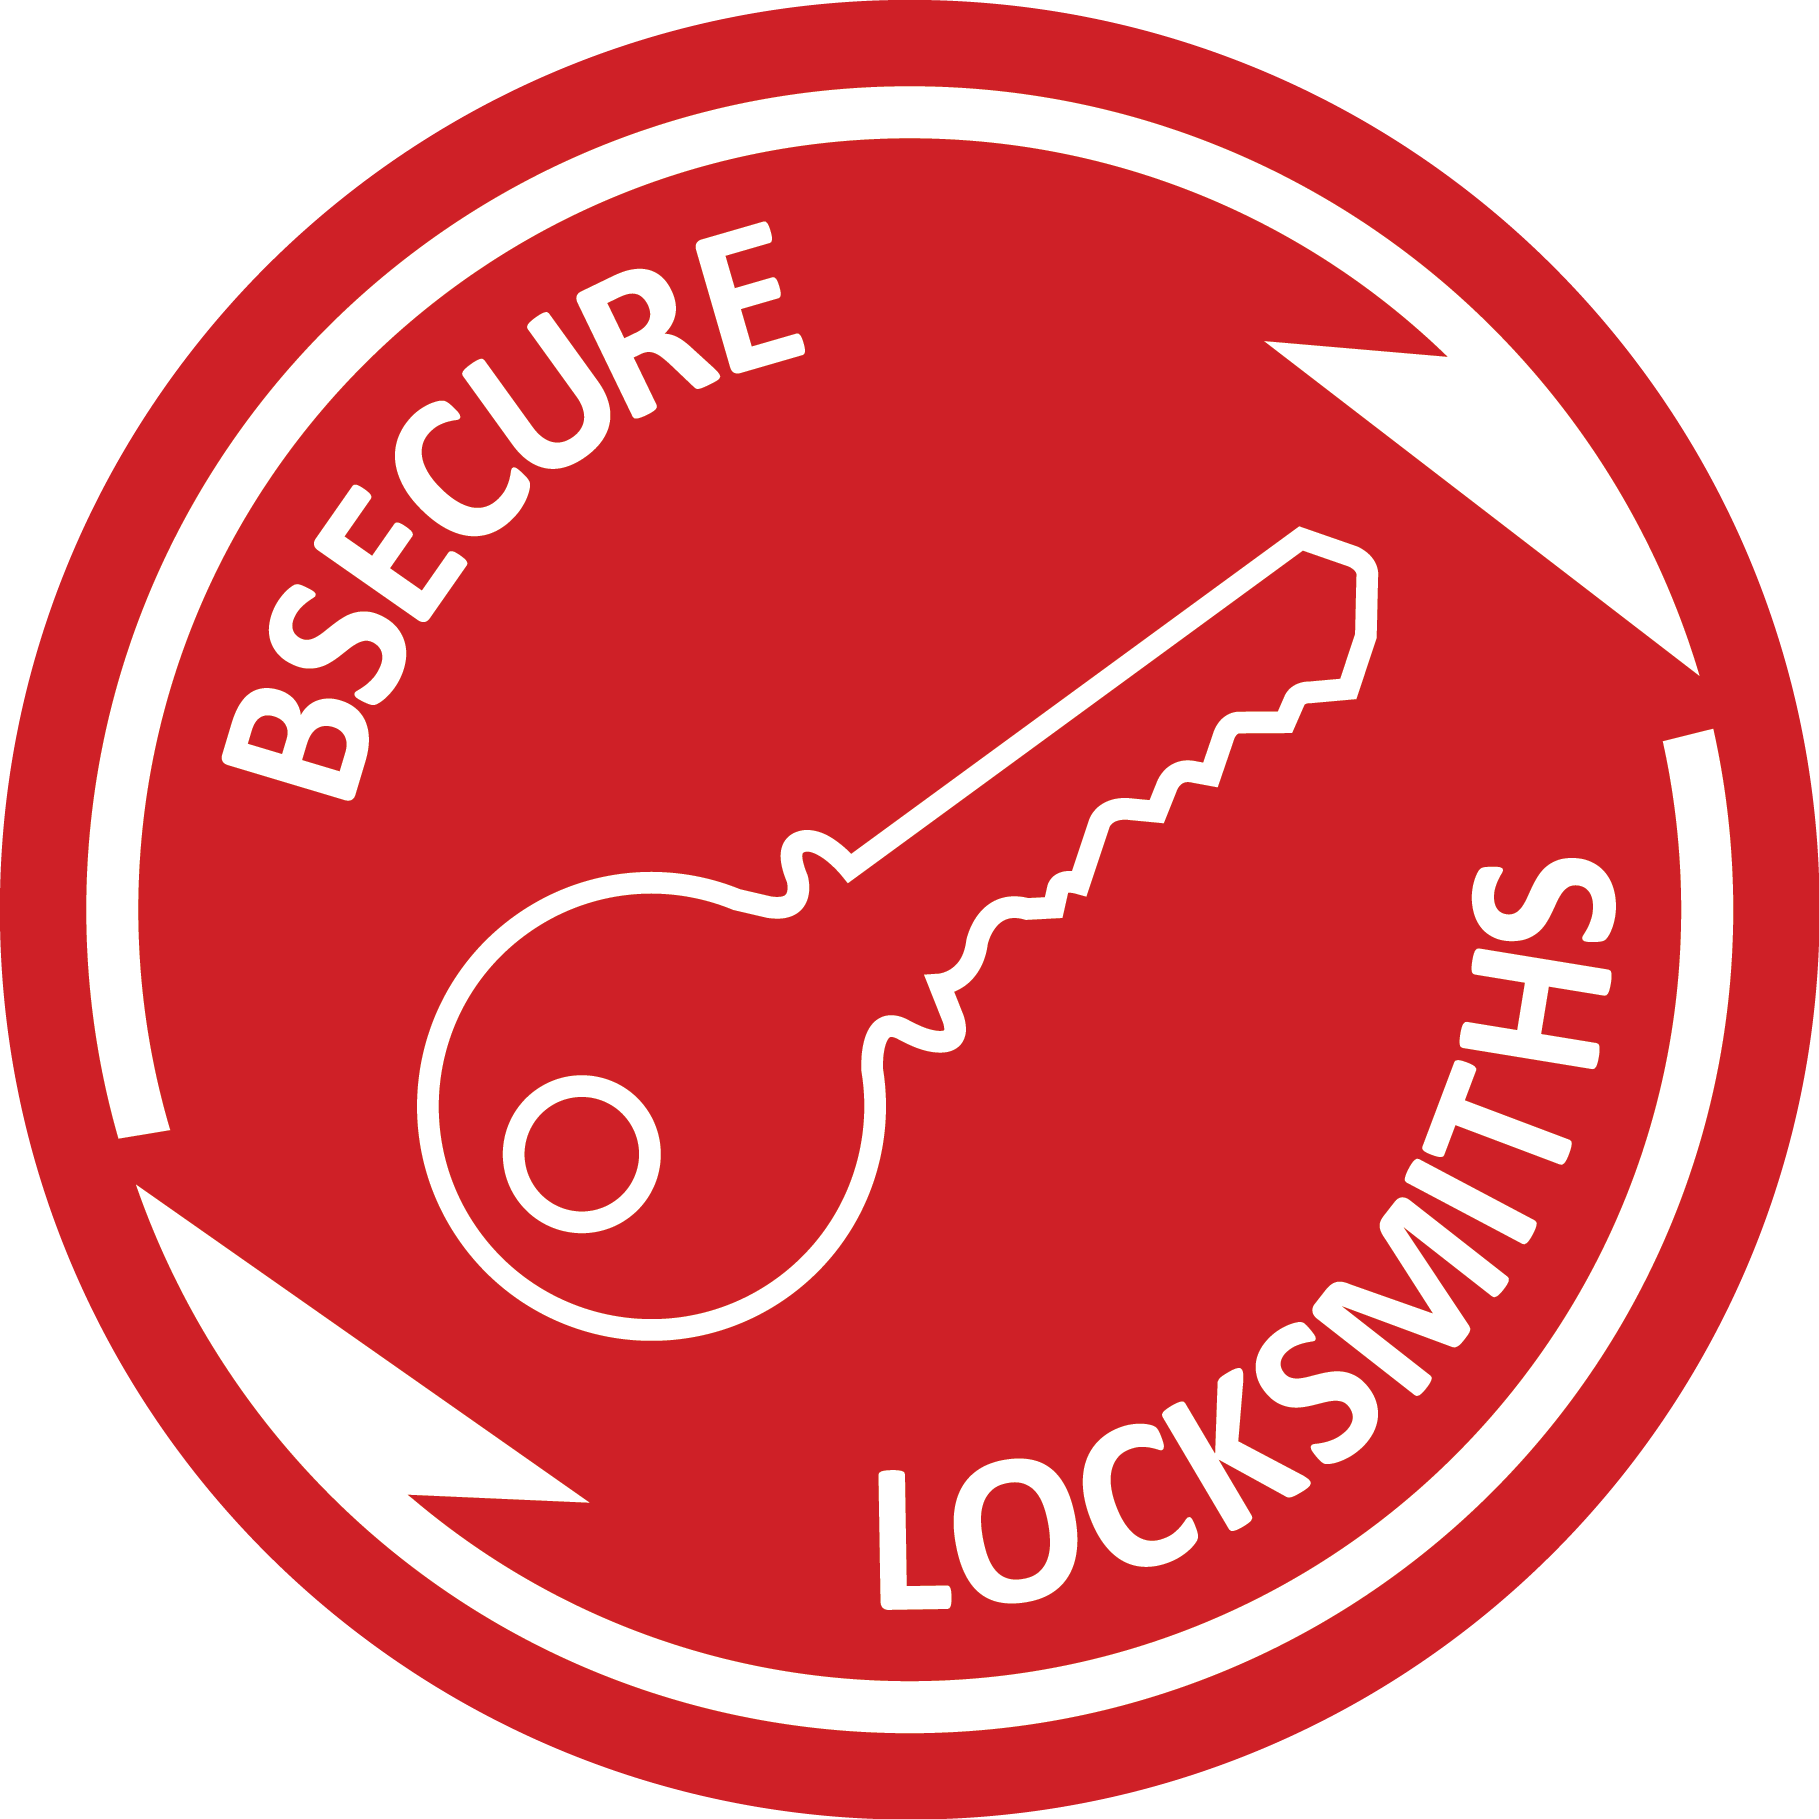 Bsecure Locksmiths Kettering